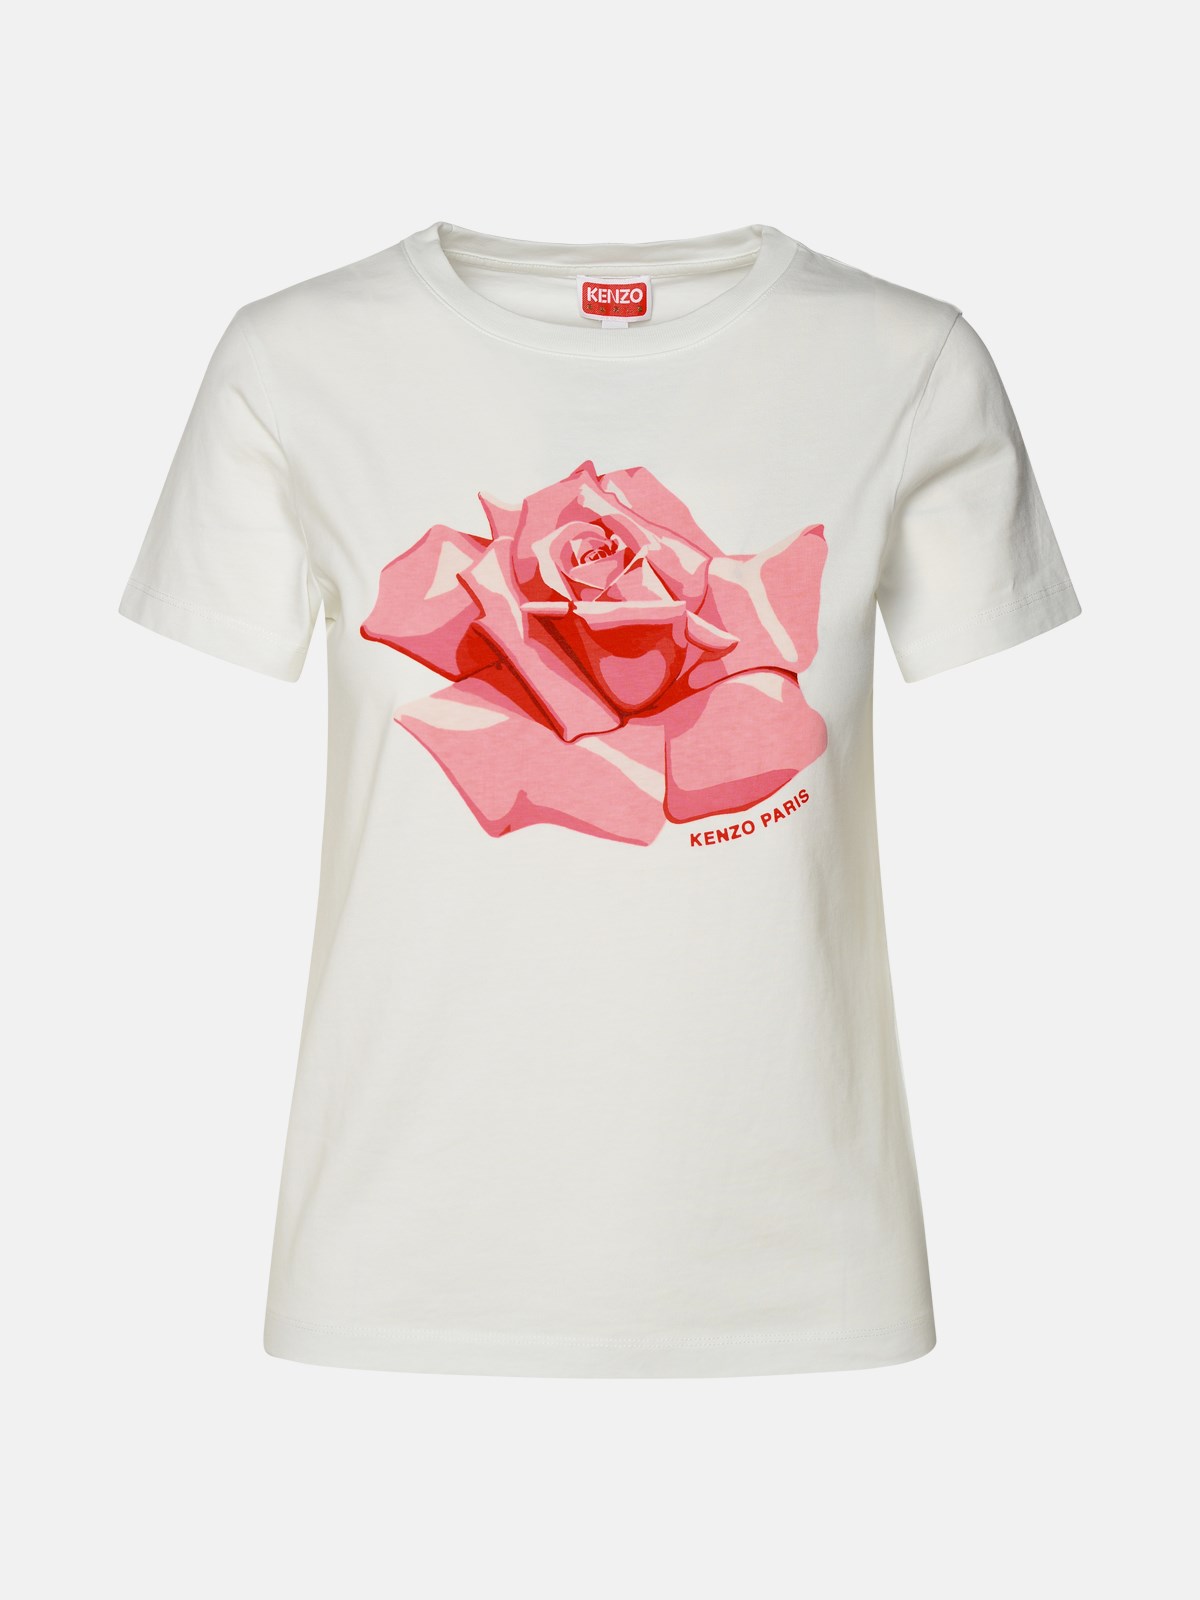 Kenzo Kids' T-shirt Stampa Rosa In White